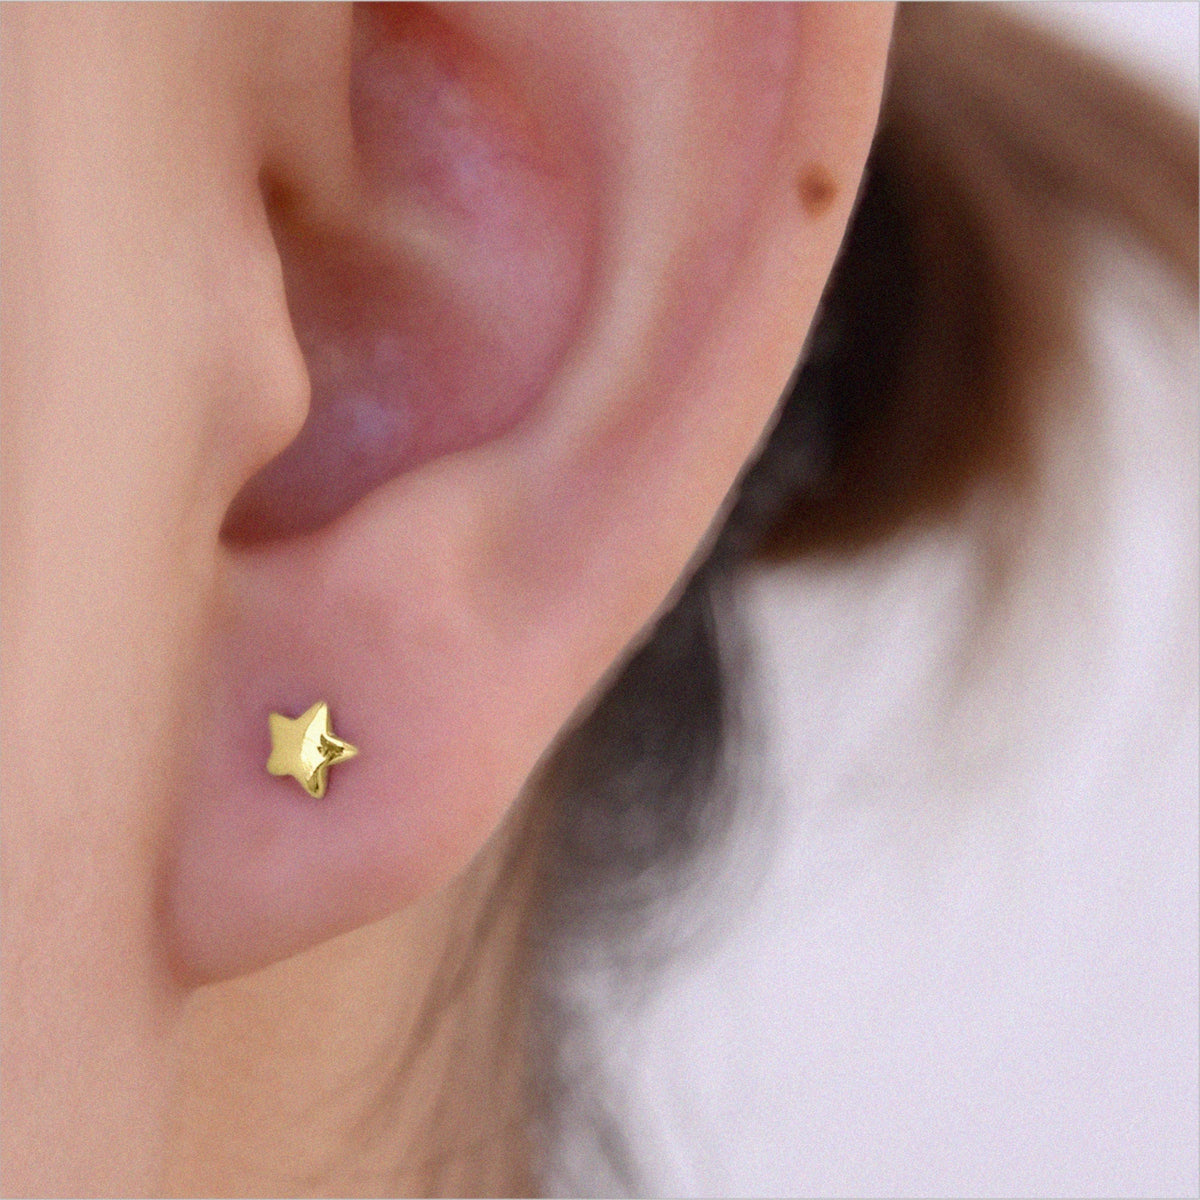 Small Star Stud Earrings 5X5 MM